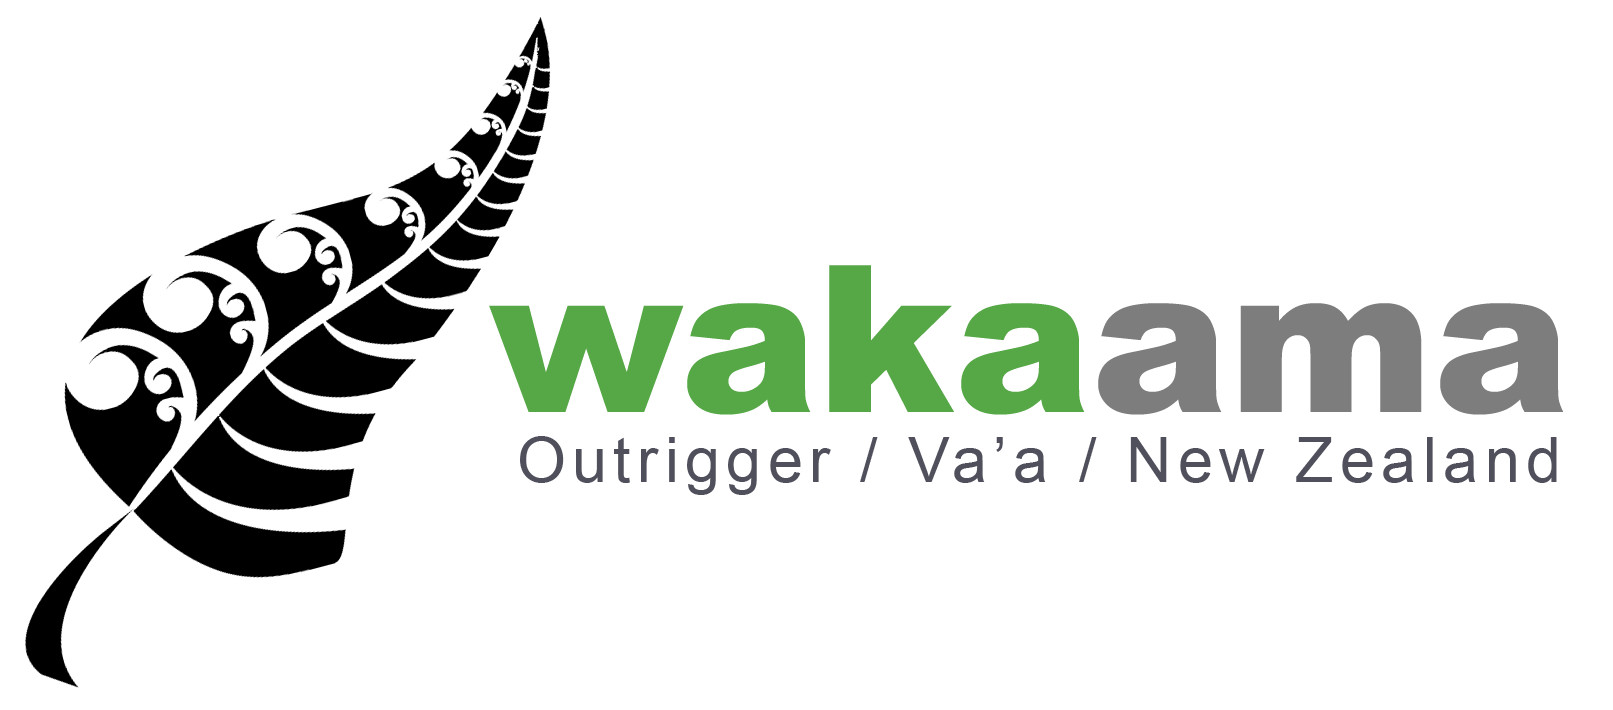 National Secondary School Waka Ama Championships 2016